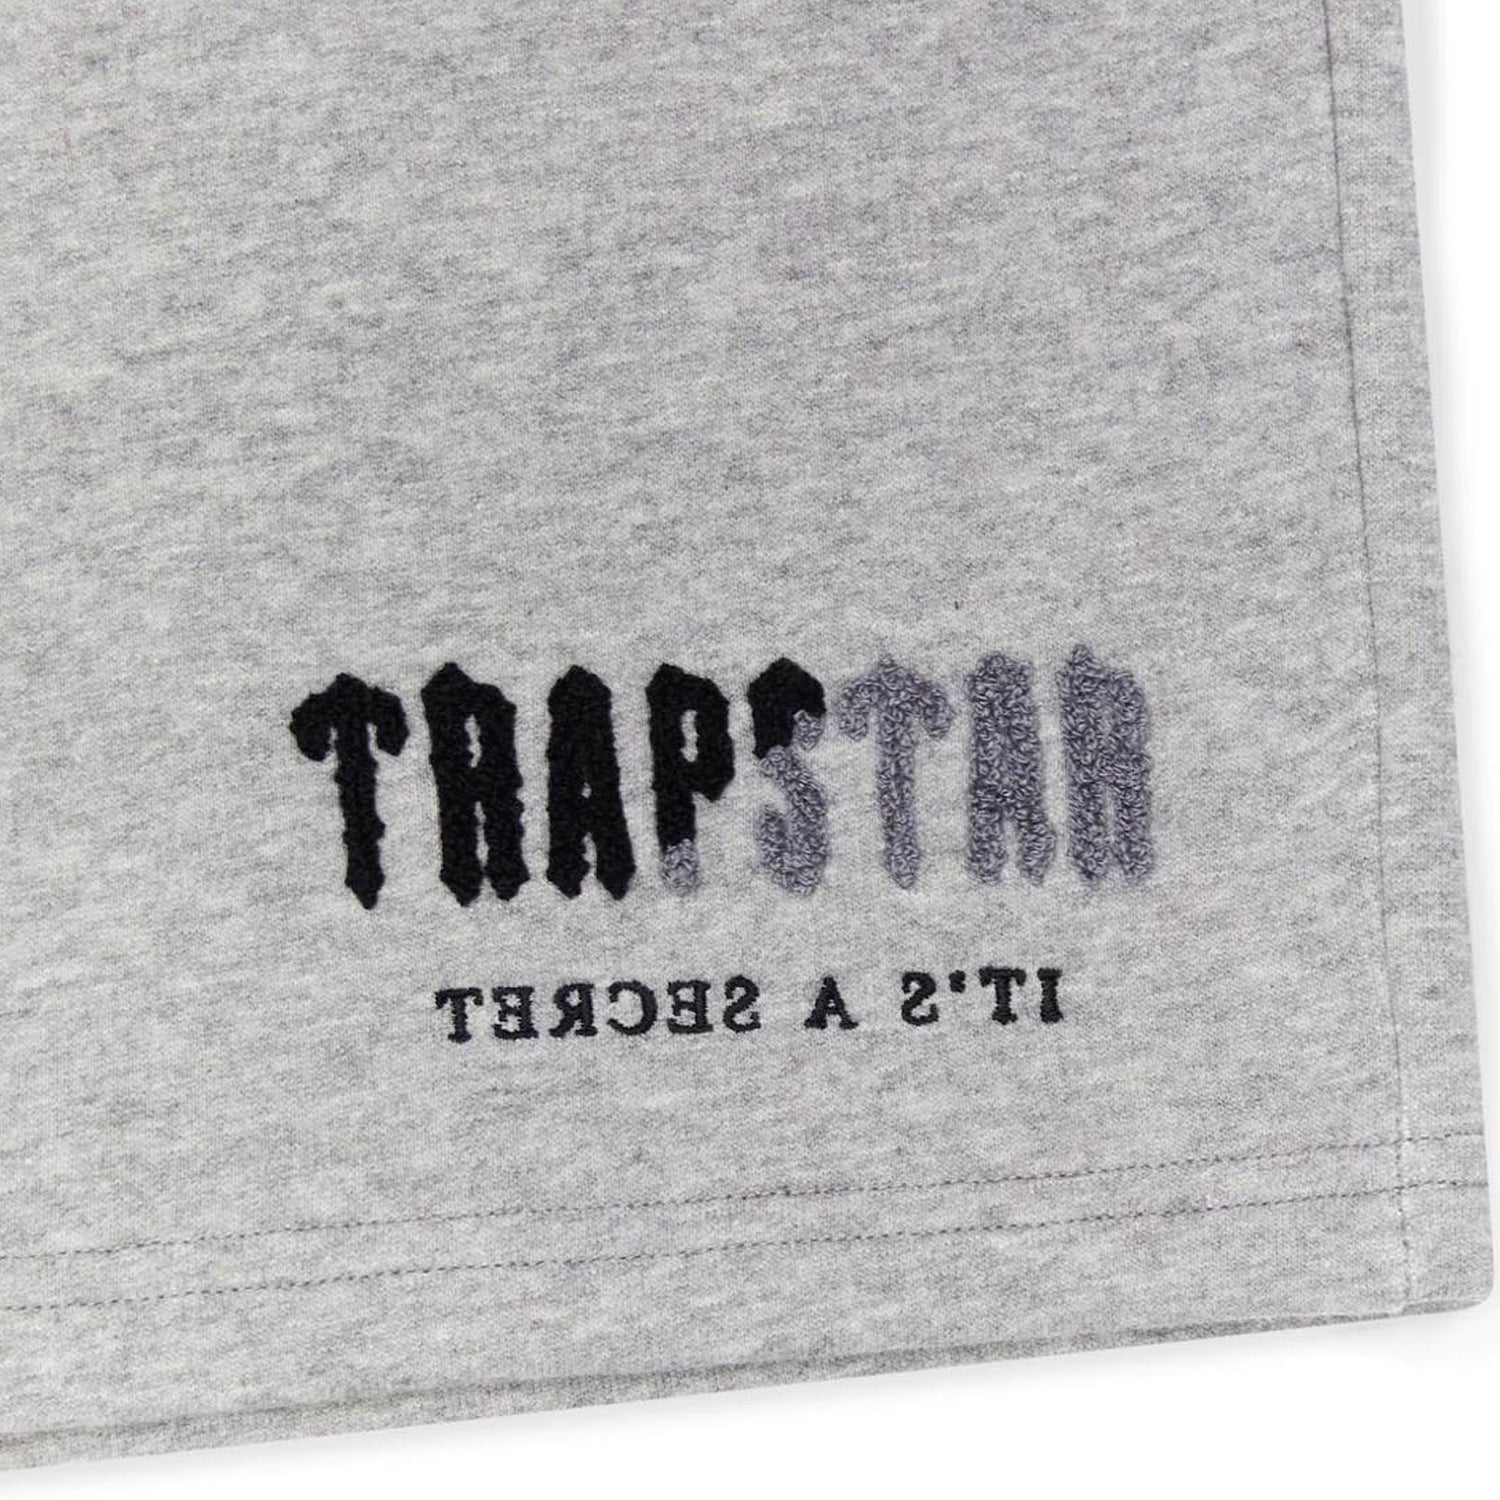 Trapstar Chenille Decoded Short Set - White / Grey